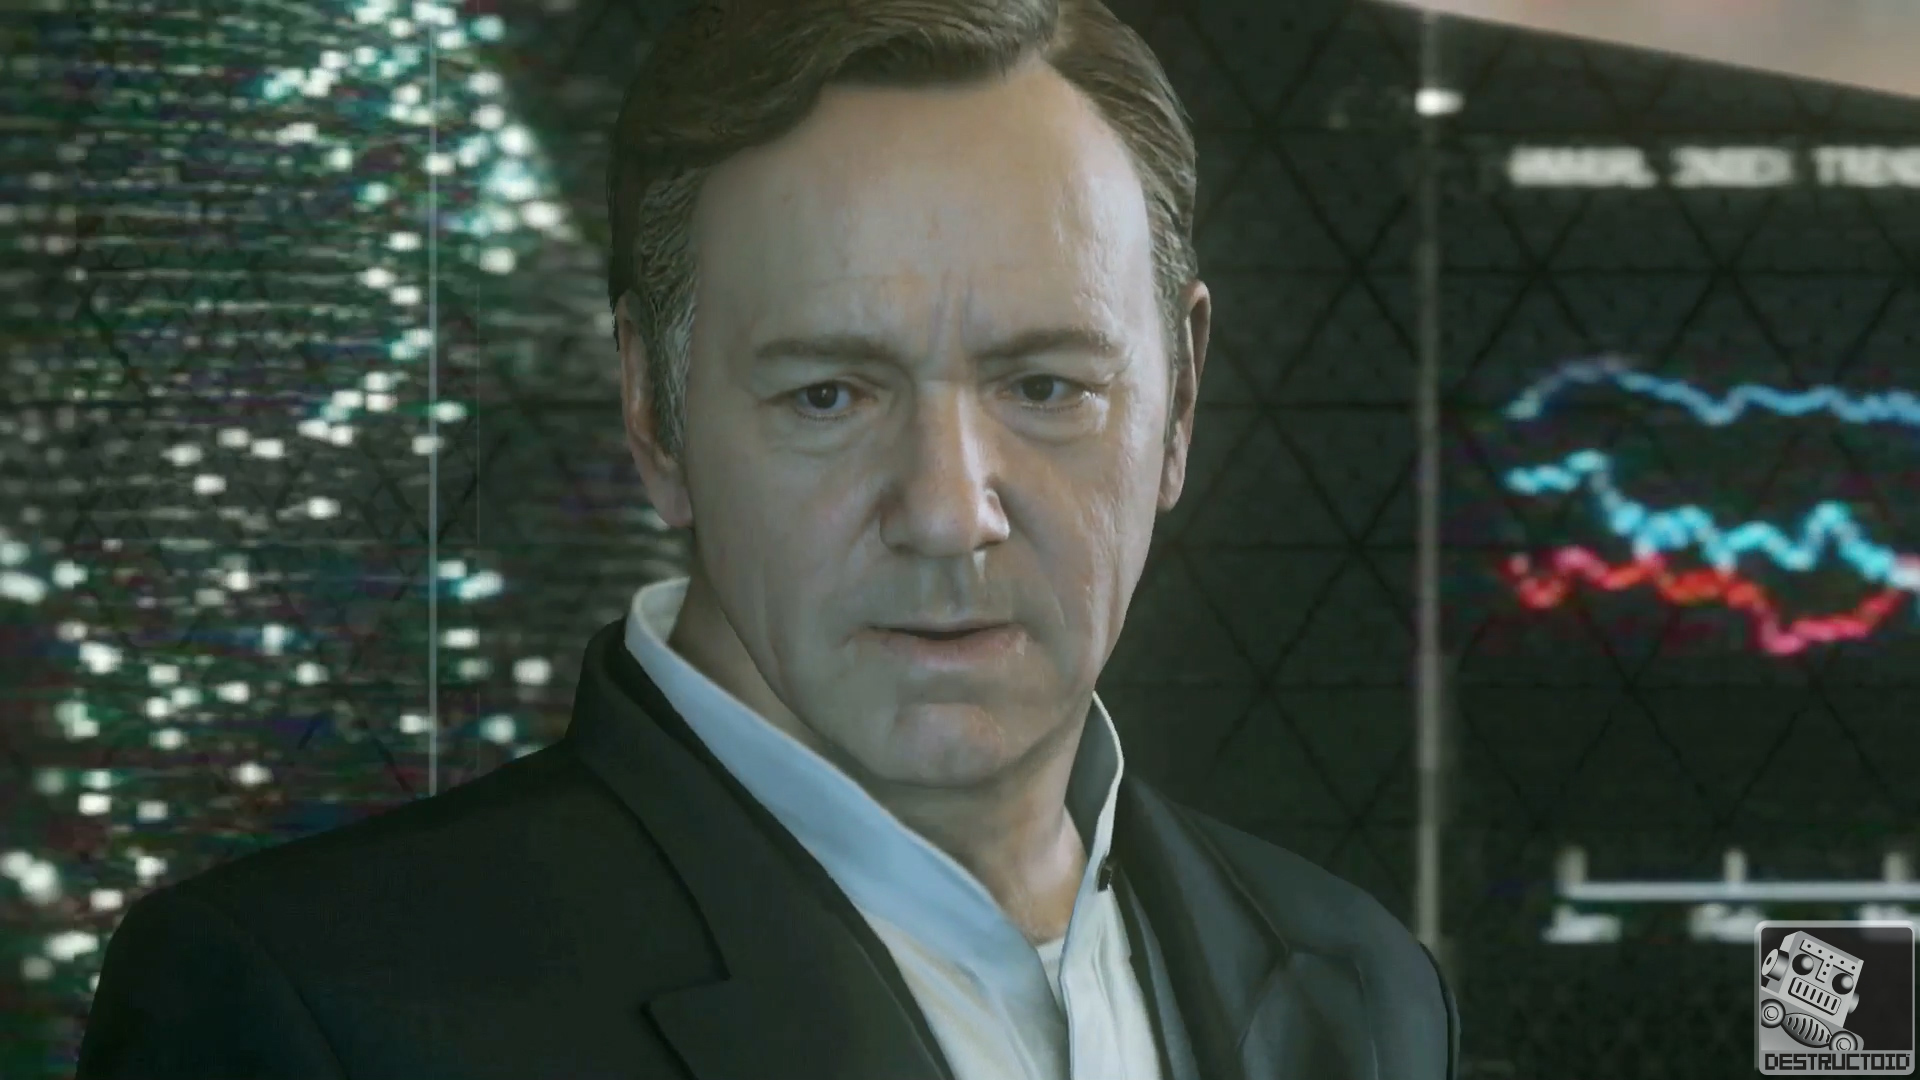 Call of Duty Advanced Warfare trailer reveals November 4th release